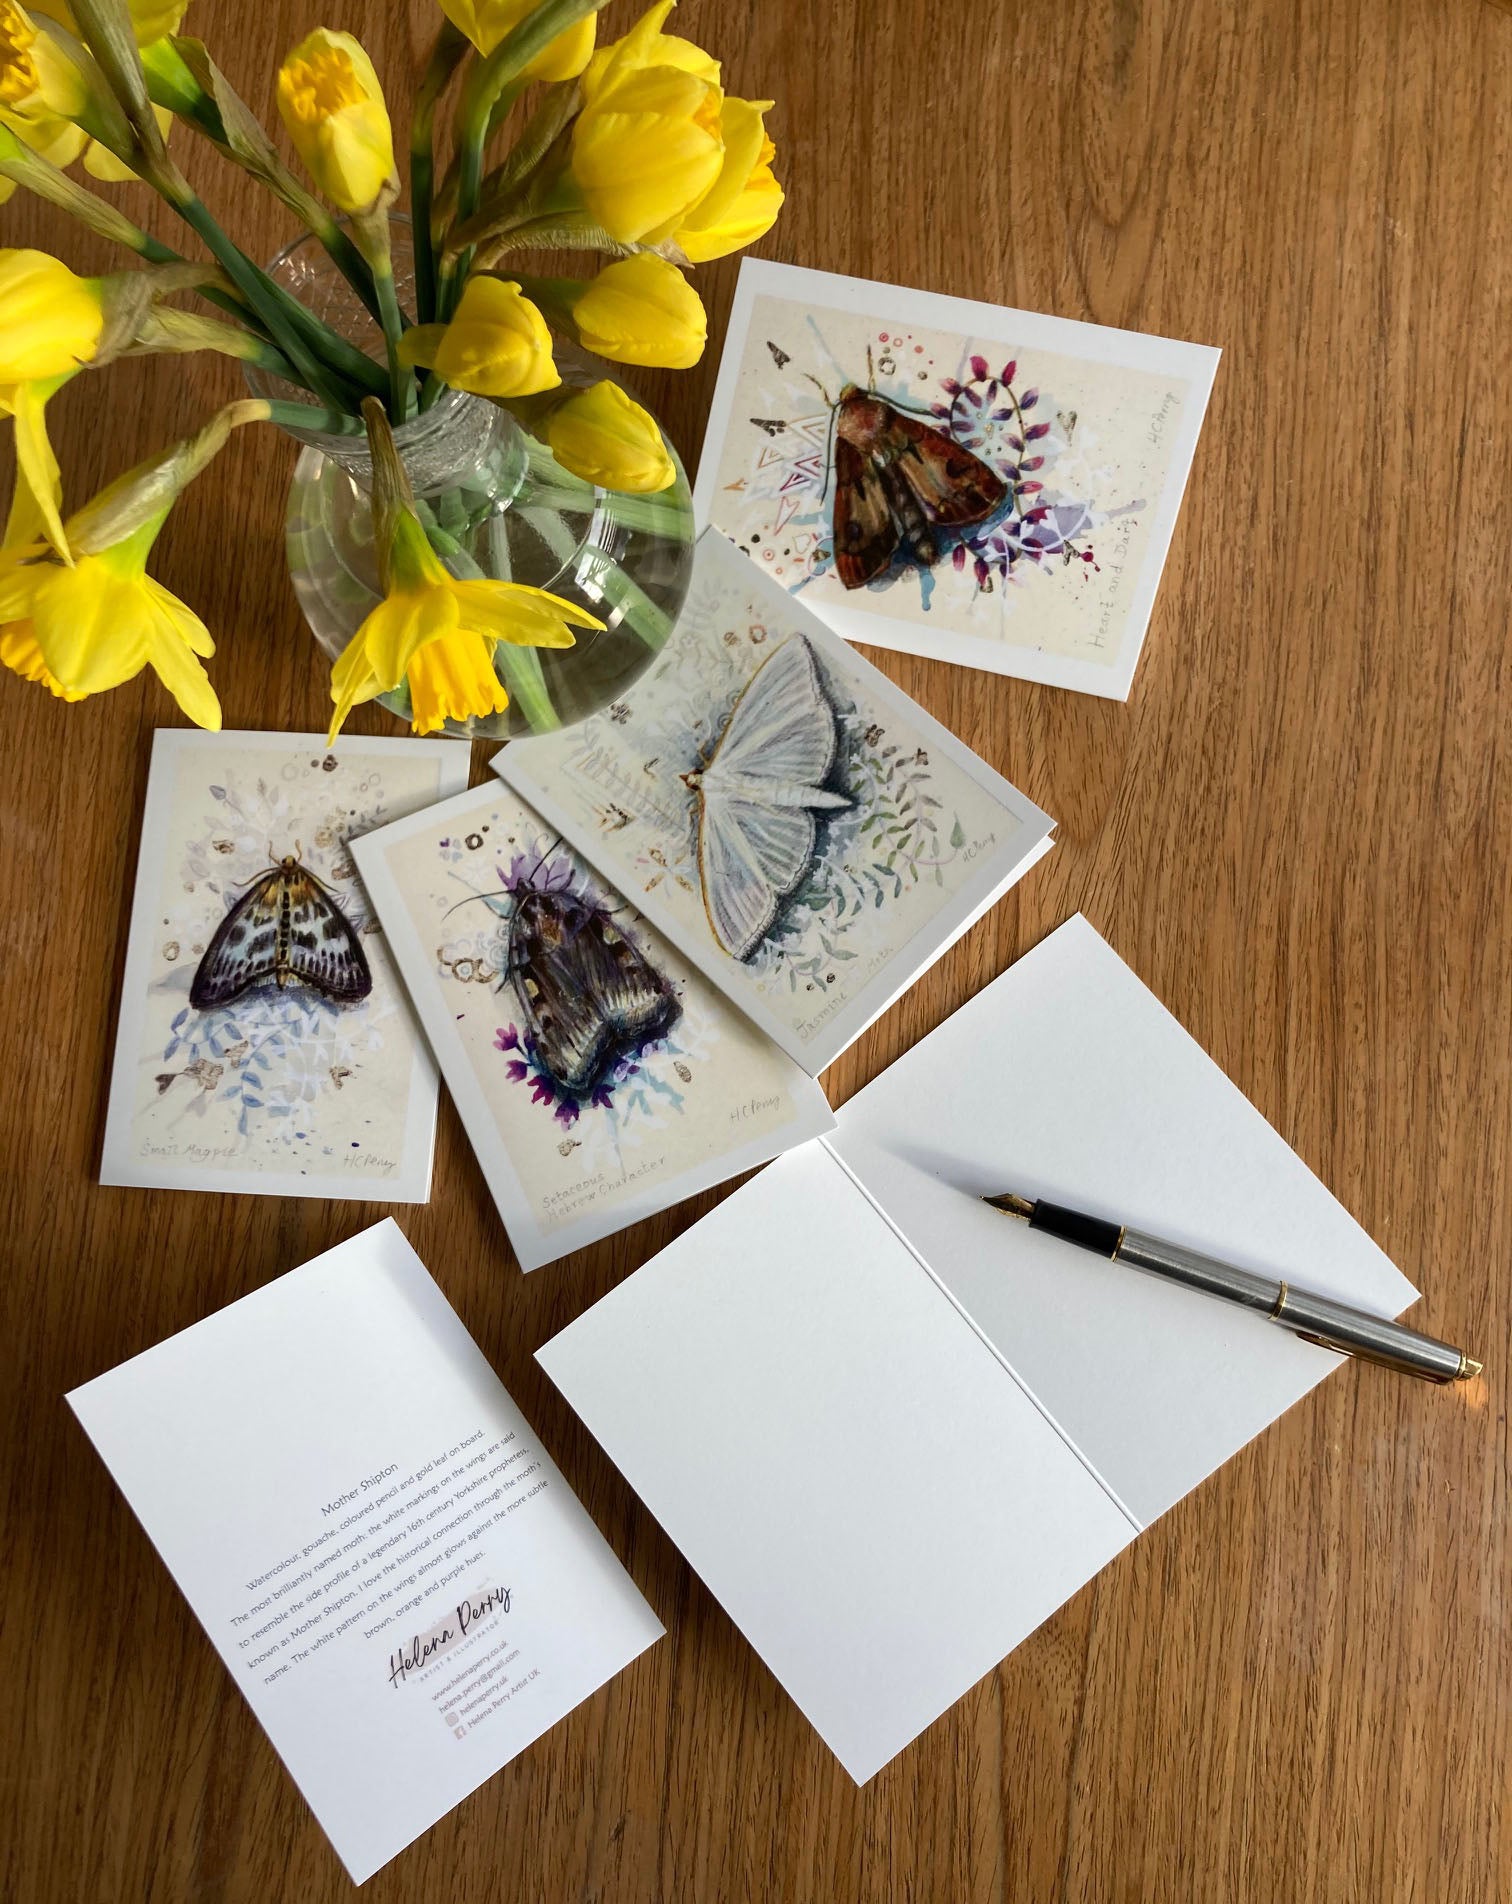 12 Moth Greetings Cards.